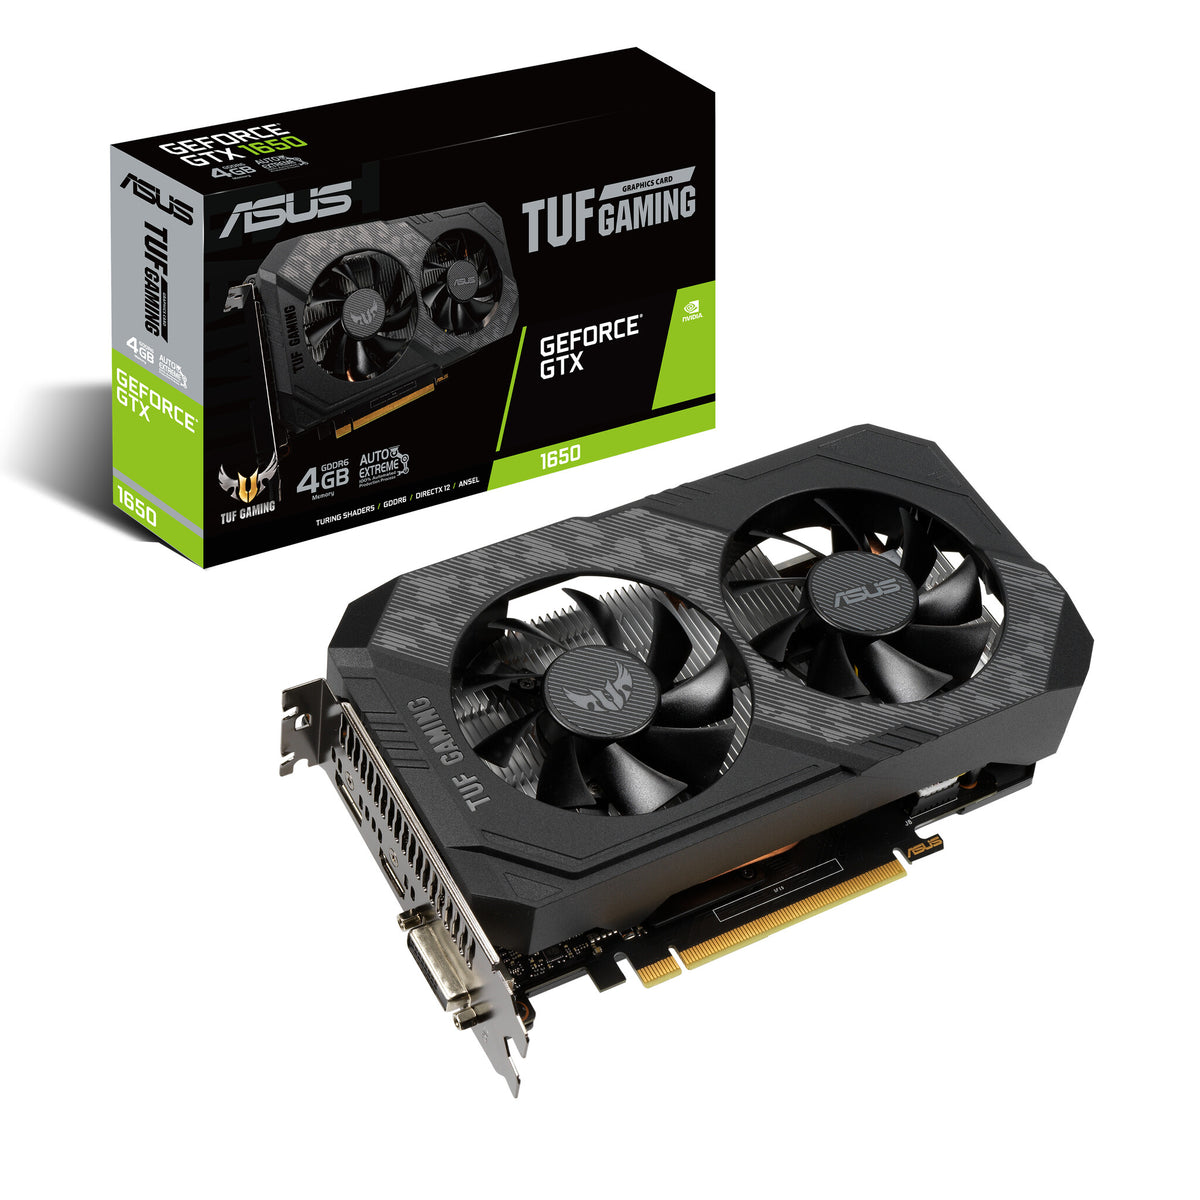 ASUS TUF Gaming - NVIDIA 4 GB GDDR6 GeForce GTX 1650 graphics card